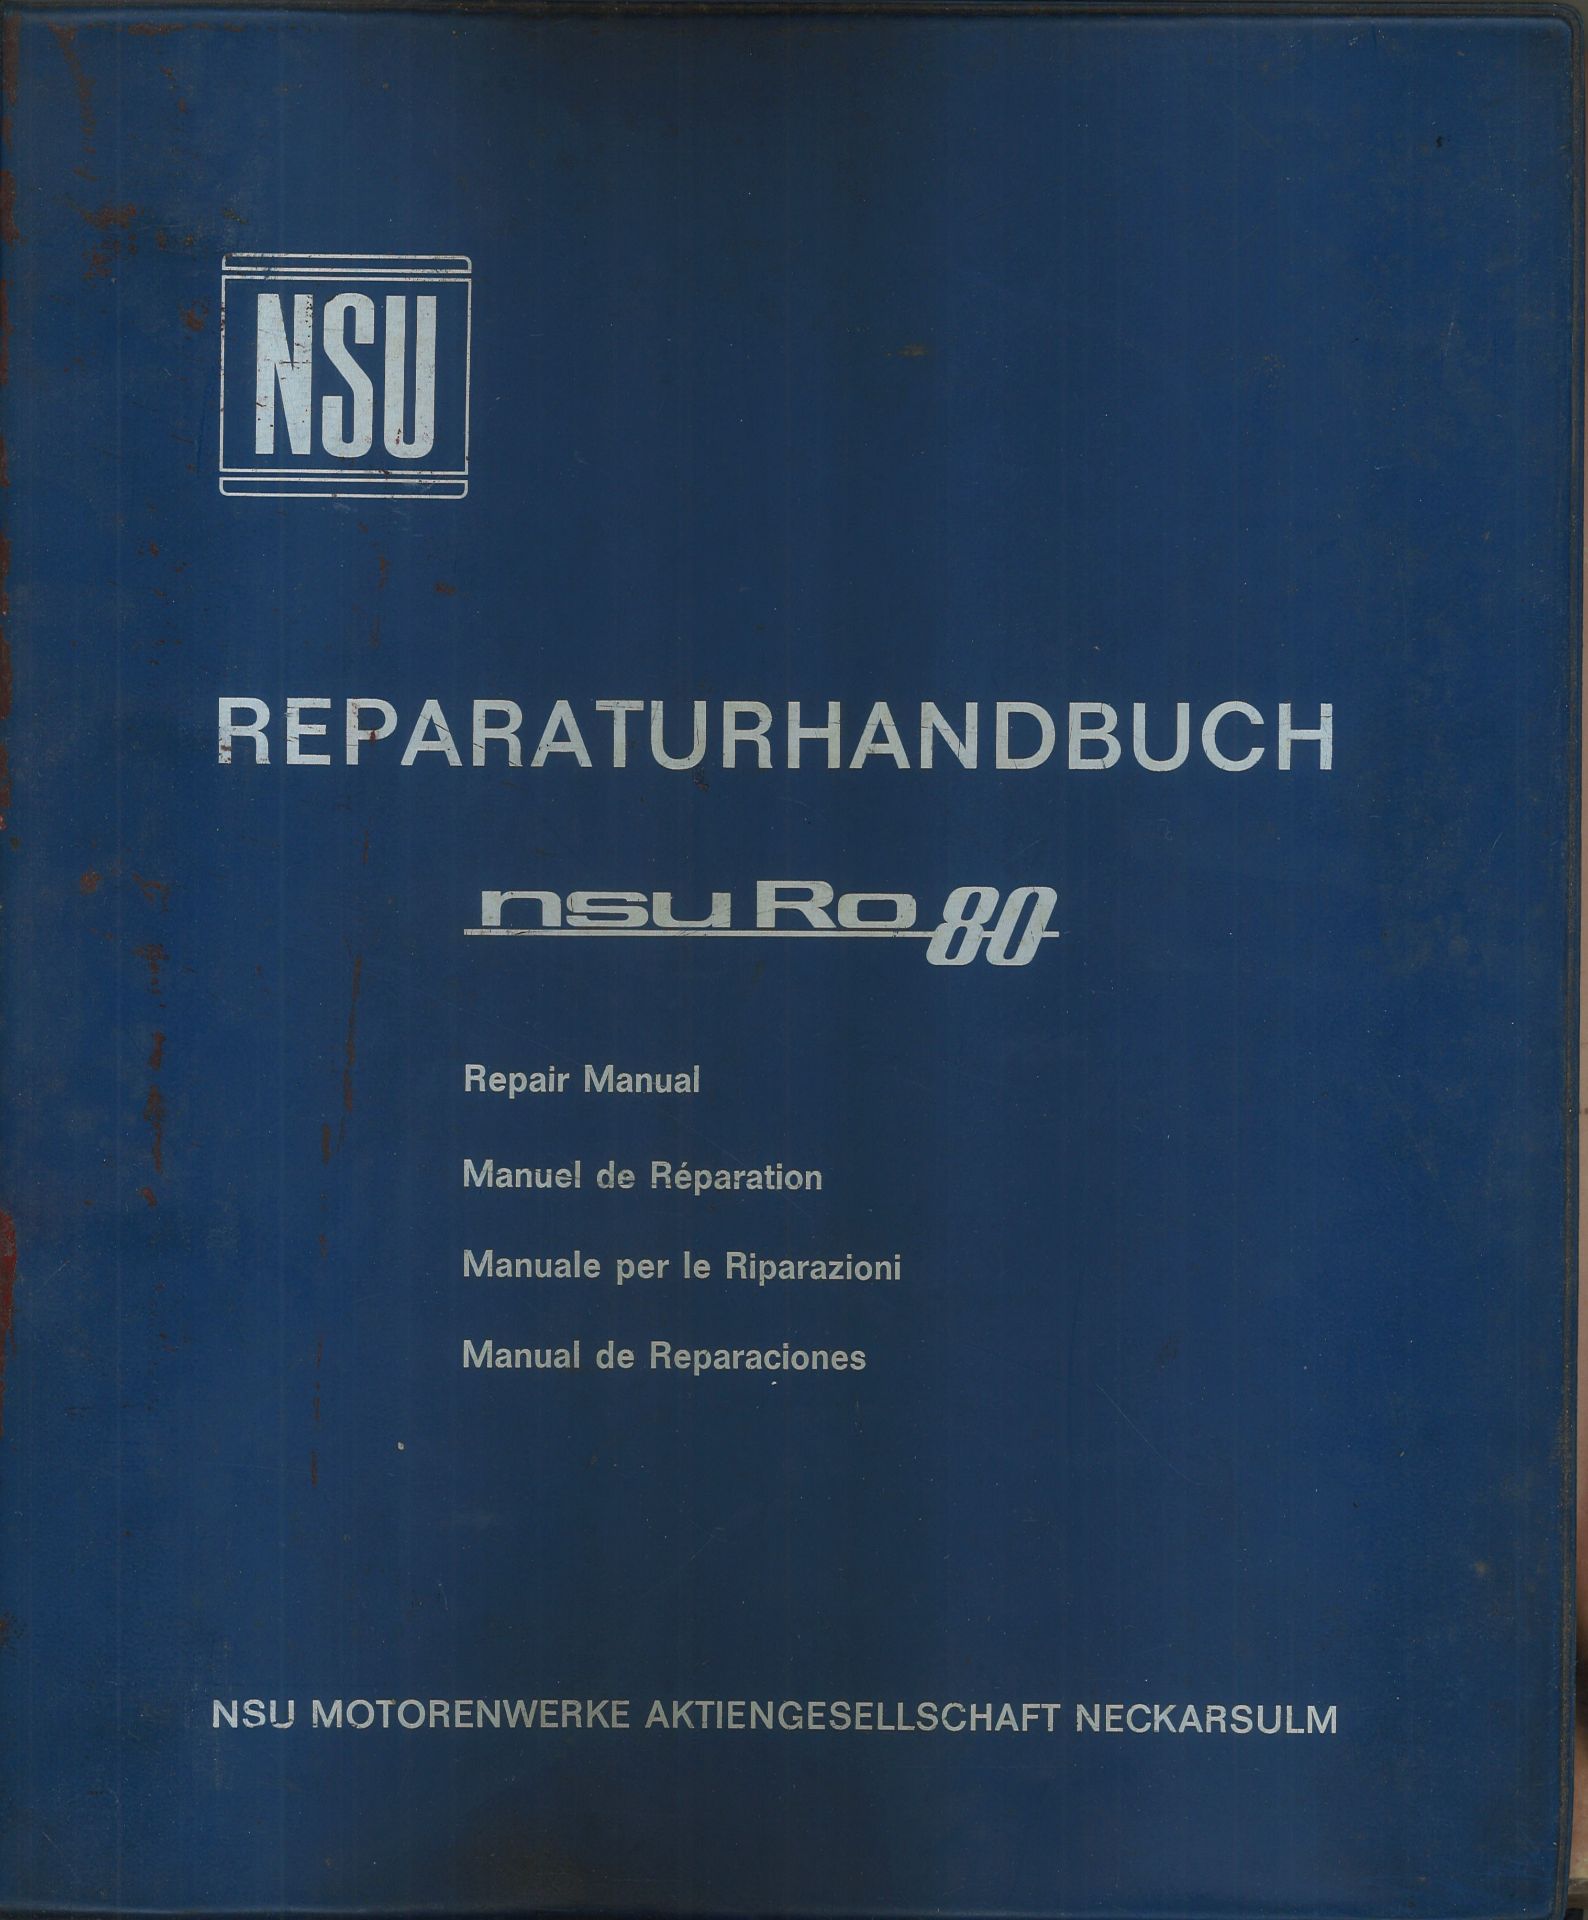 NSU Reparaturhandbuch "NSU RO 80" NSU Motorenwerke Aktiengesellschaft Neckarsulm. Januar 1970.